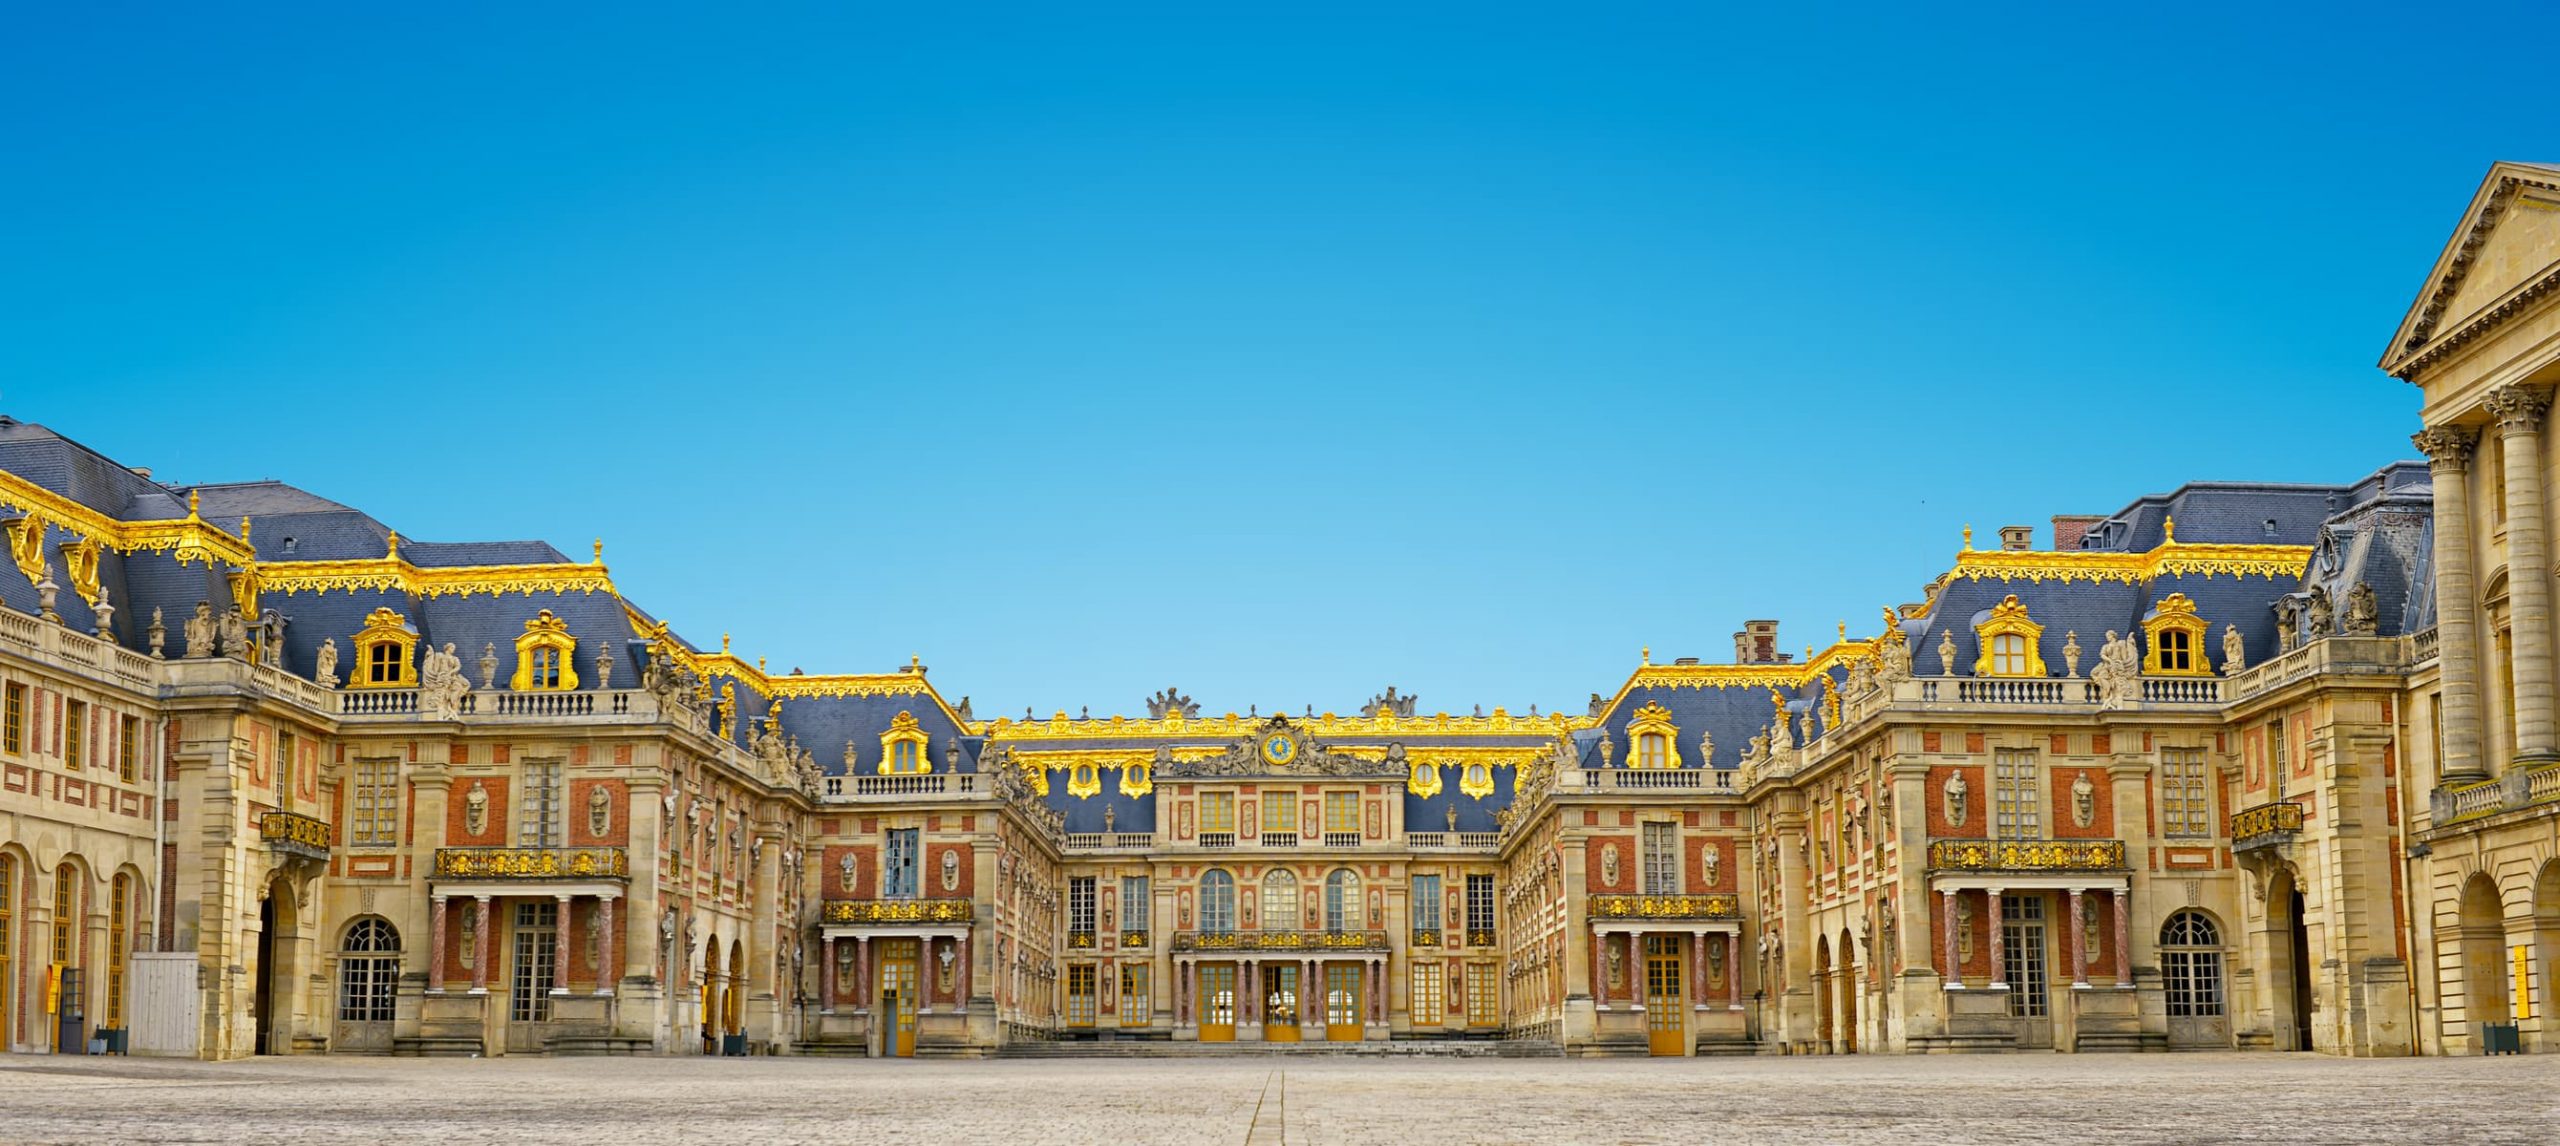 How To Get To Versailles From Paris: 4 Best Ways